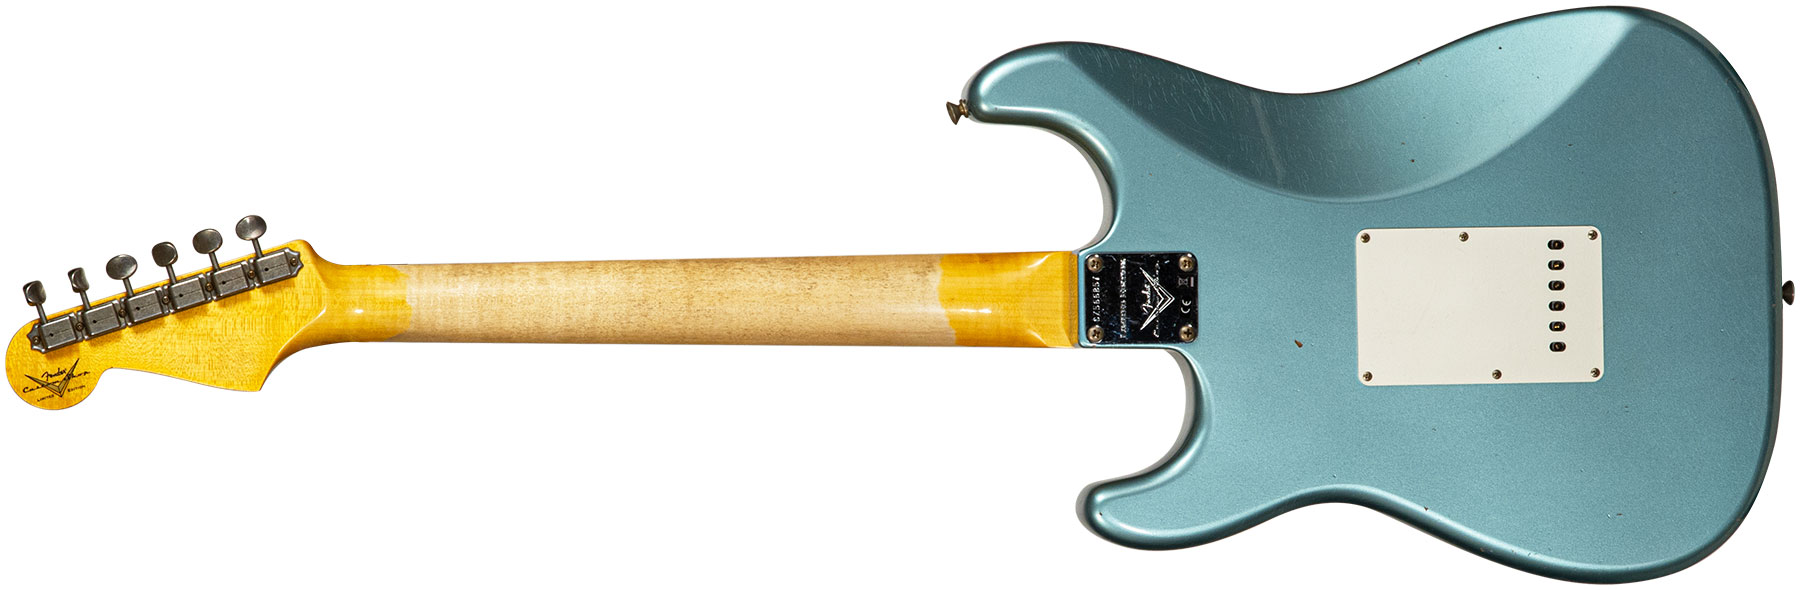 Fender Custom Shop Strat 1959 3s Trem Rw #cz566857 - Journeyman Relic Teal Green Metallic - Elektrische gitaar in Str-vorm - Variation 1